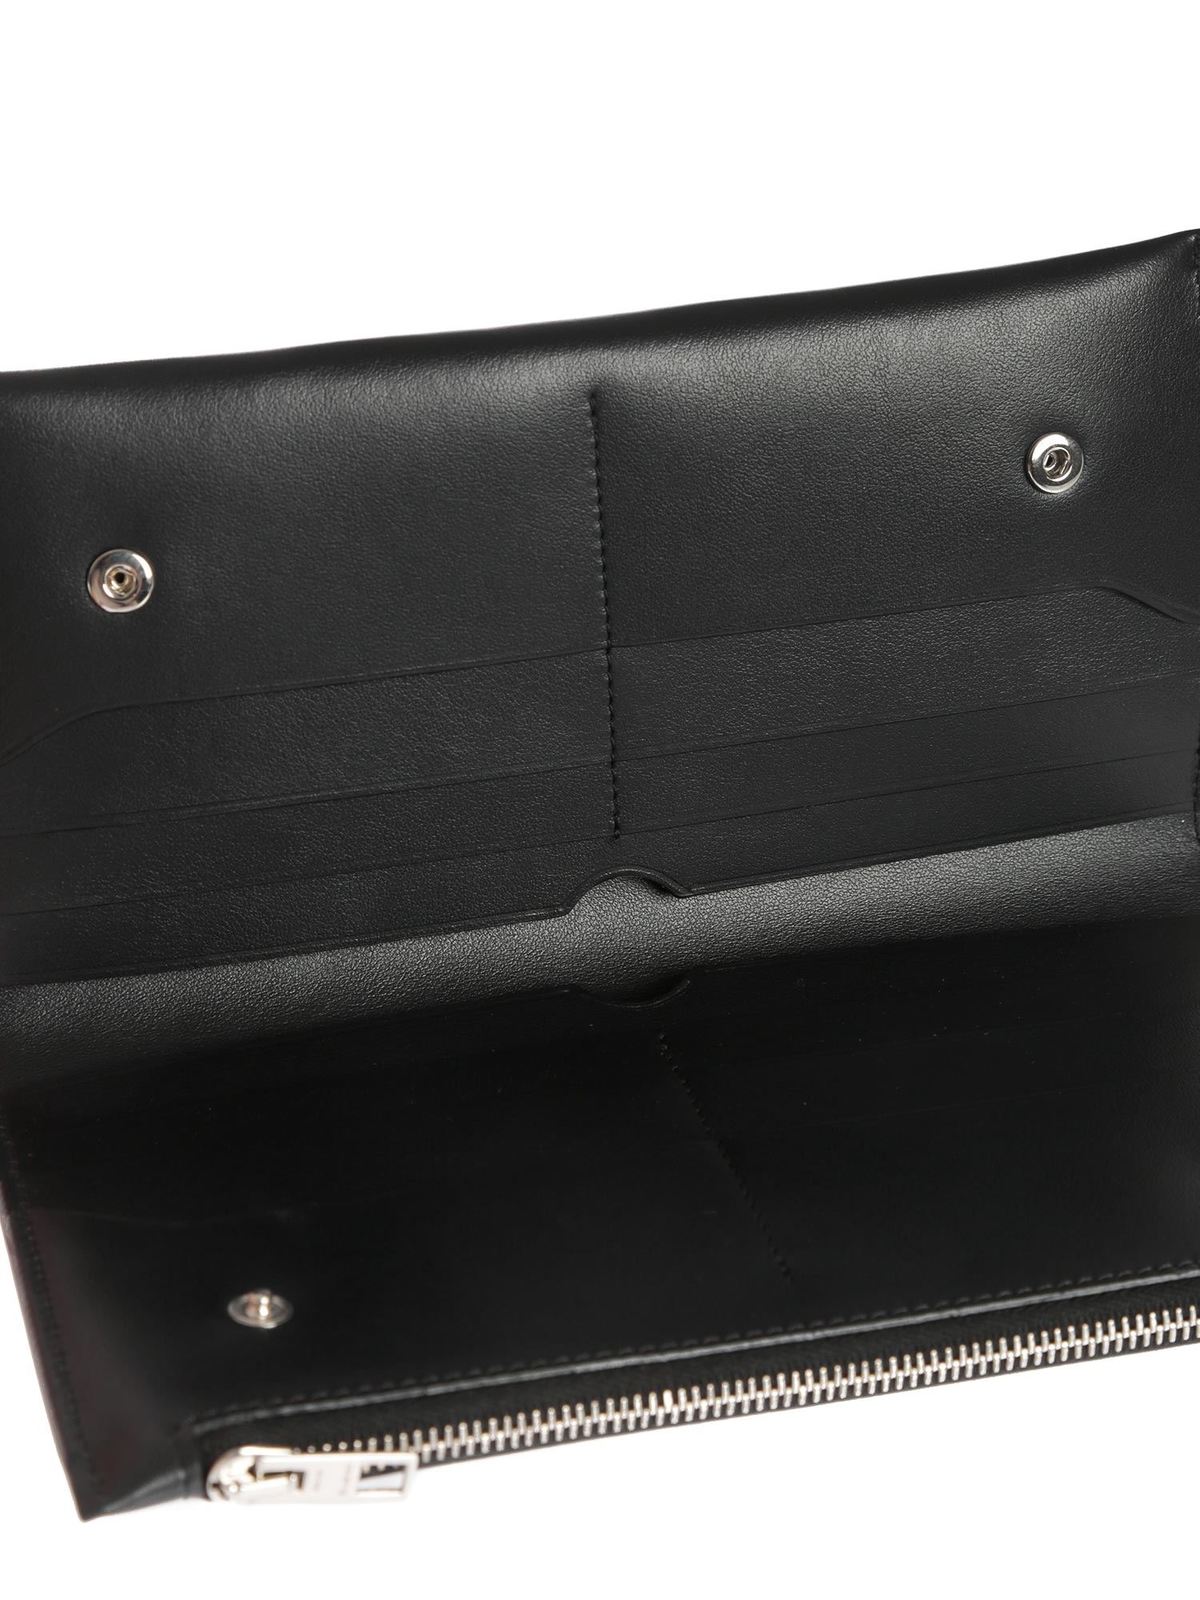 Wallets & purses Acne Studios - Bifold continental wallet black